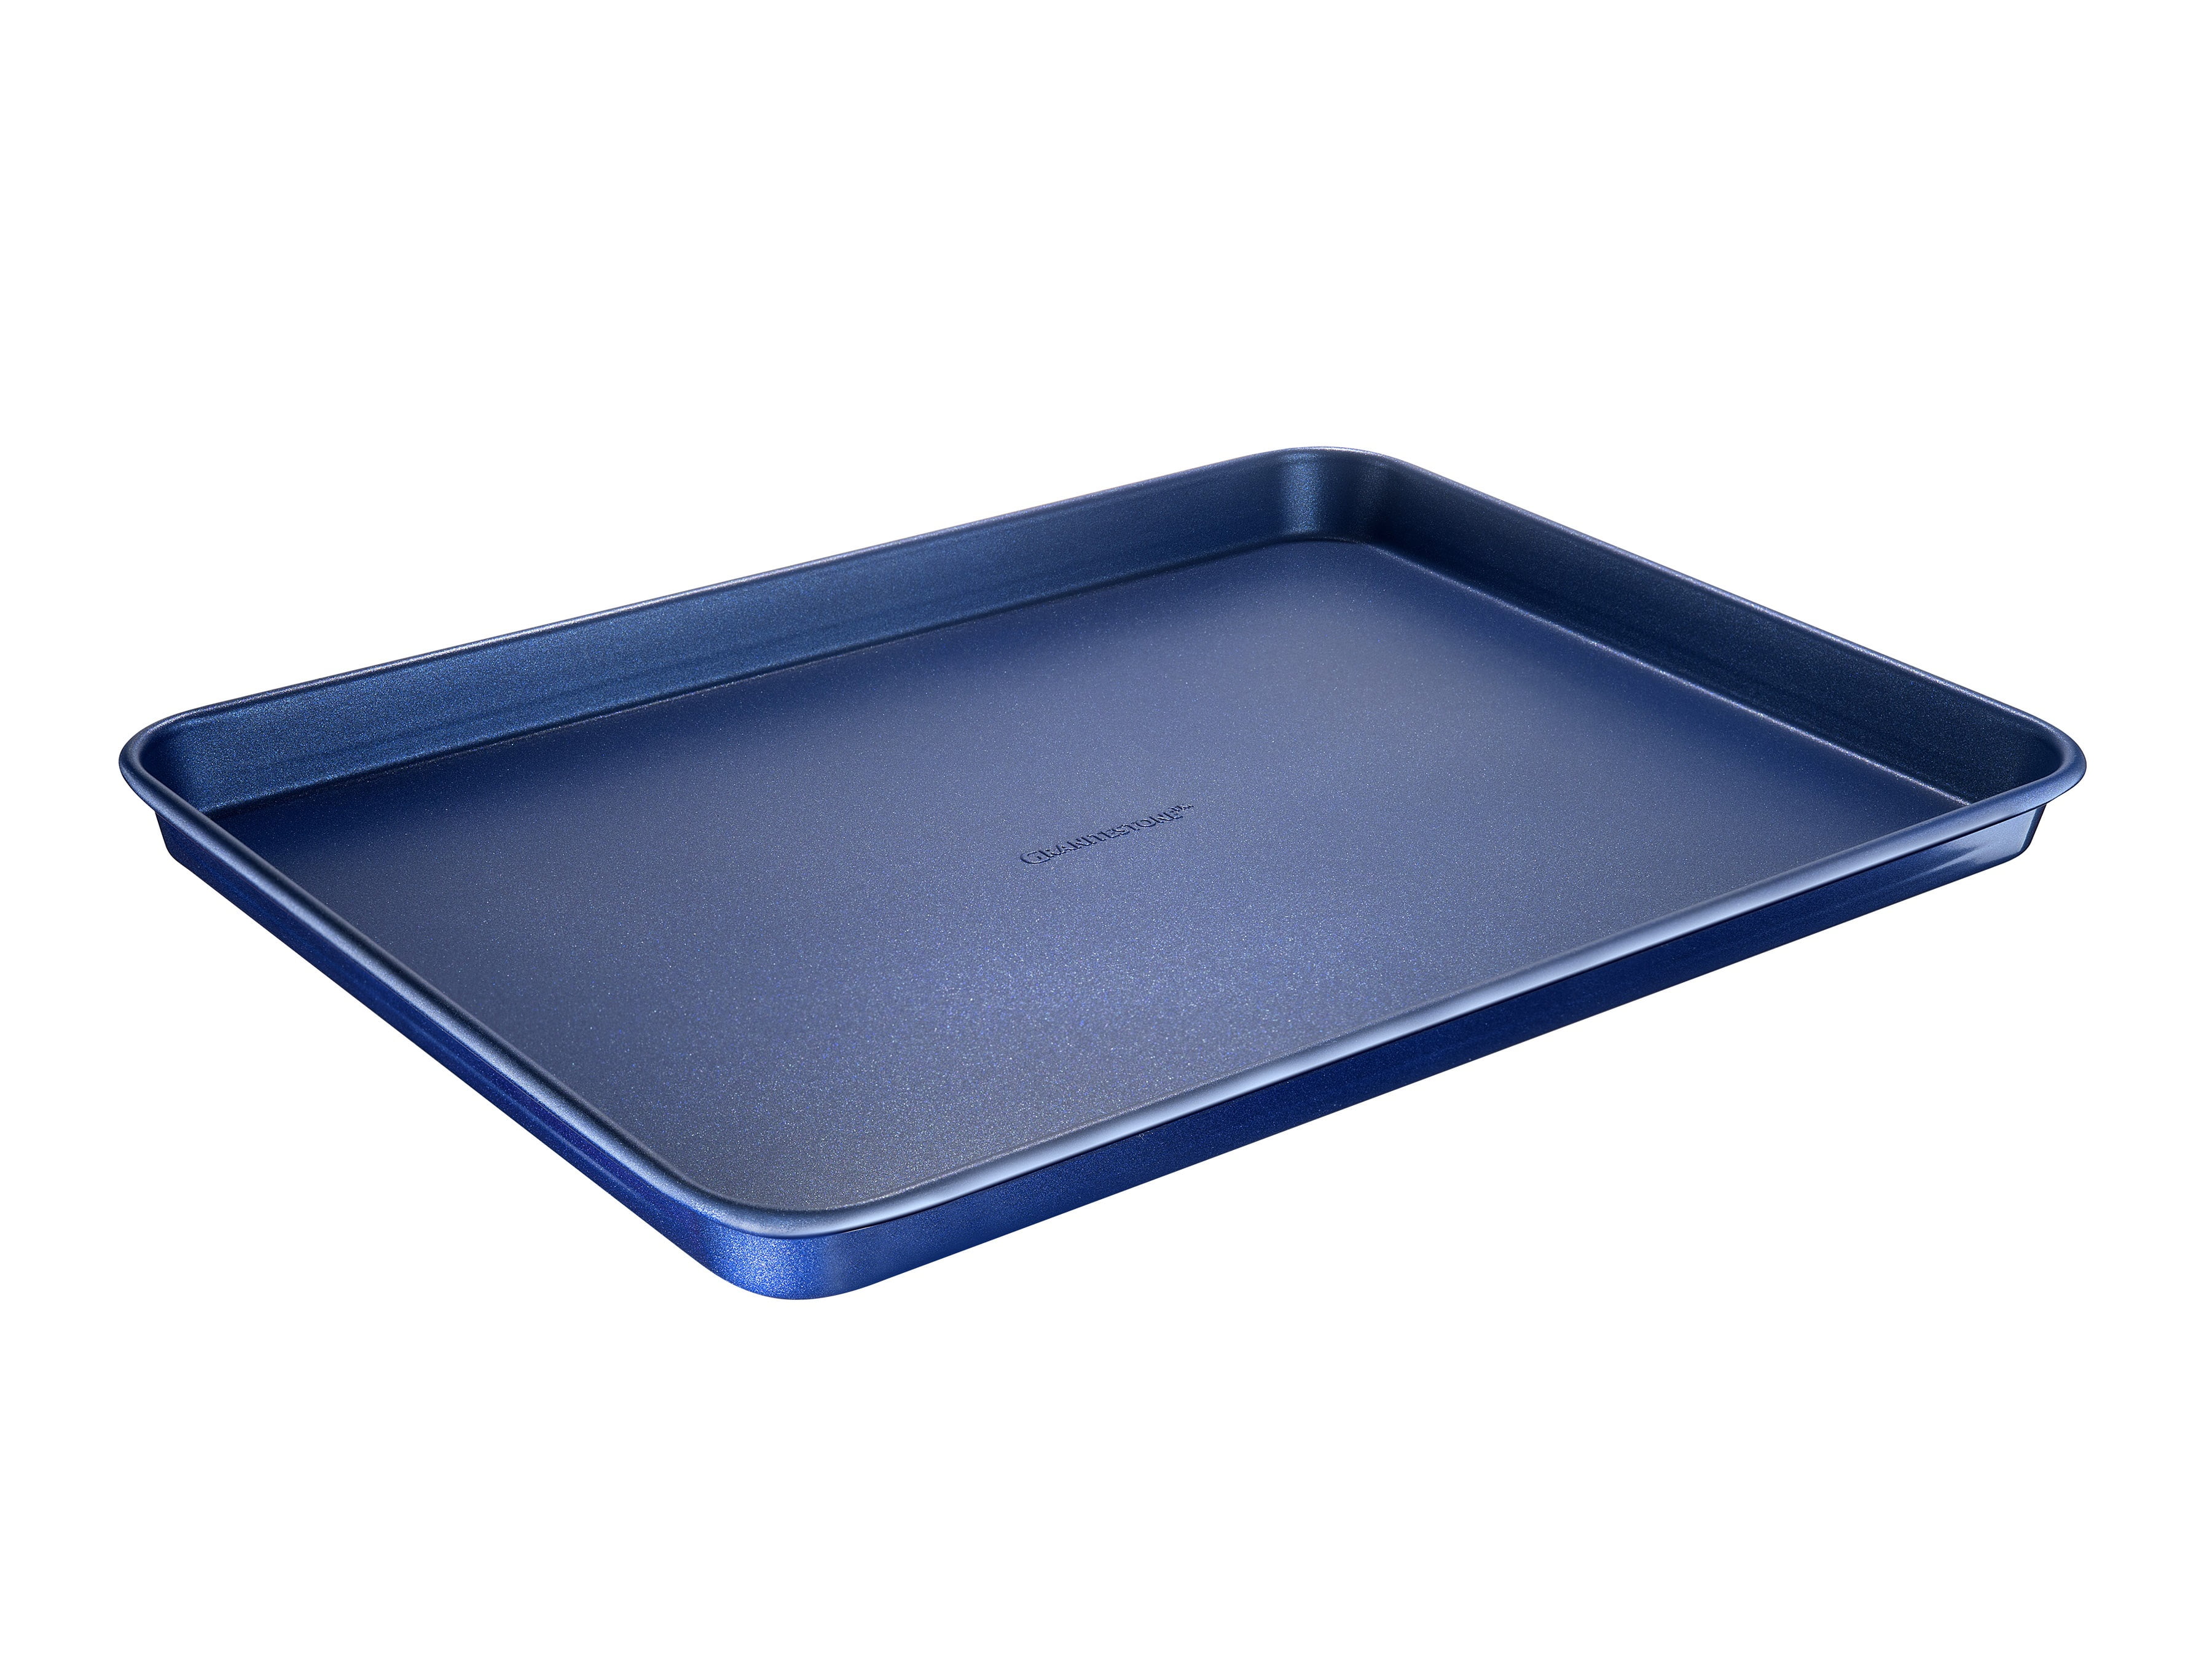 Granitestone Bakeware Nonstick Cookie Sheet XL Baking Tray, Ultra Nonstick  Mineral Coating & Dishwasher Safe, Pro Heavy-Duty Chef's Bakeware 17.7” x  12.7”, Blue 